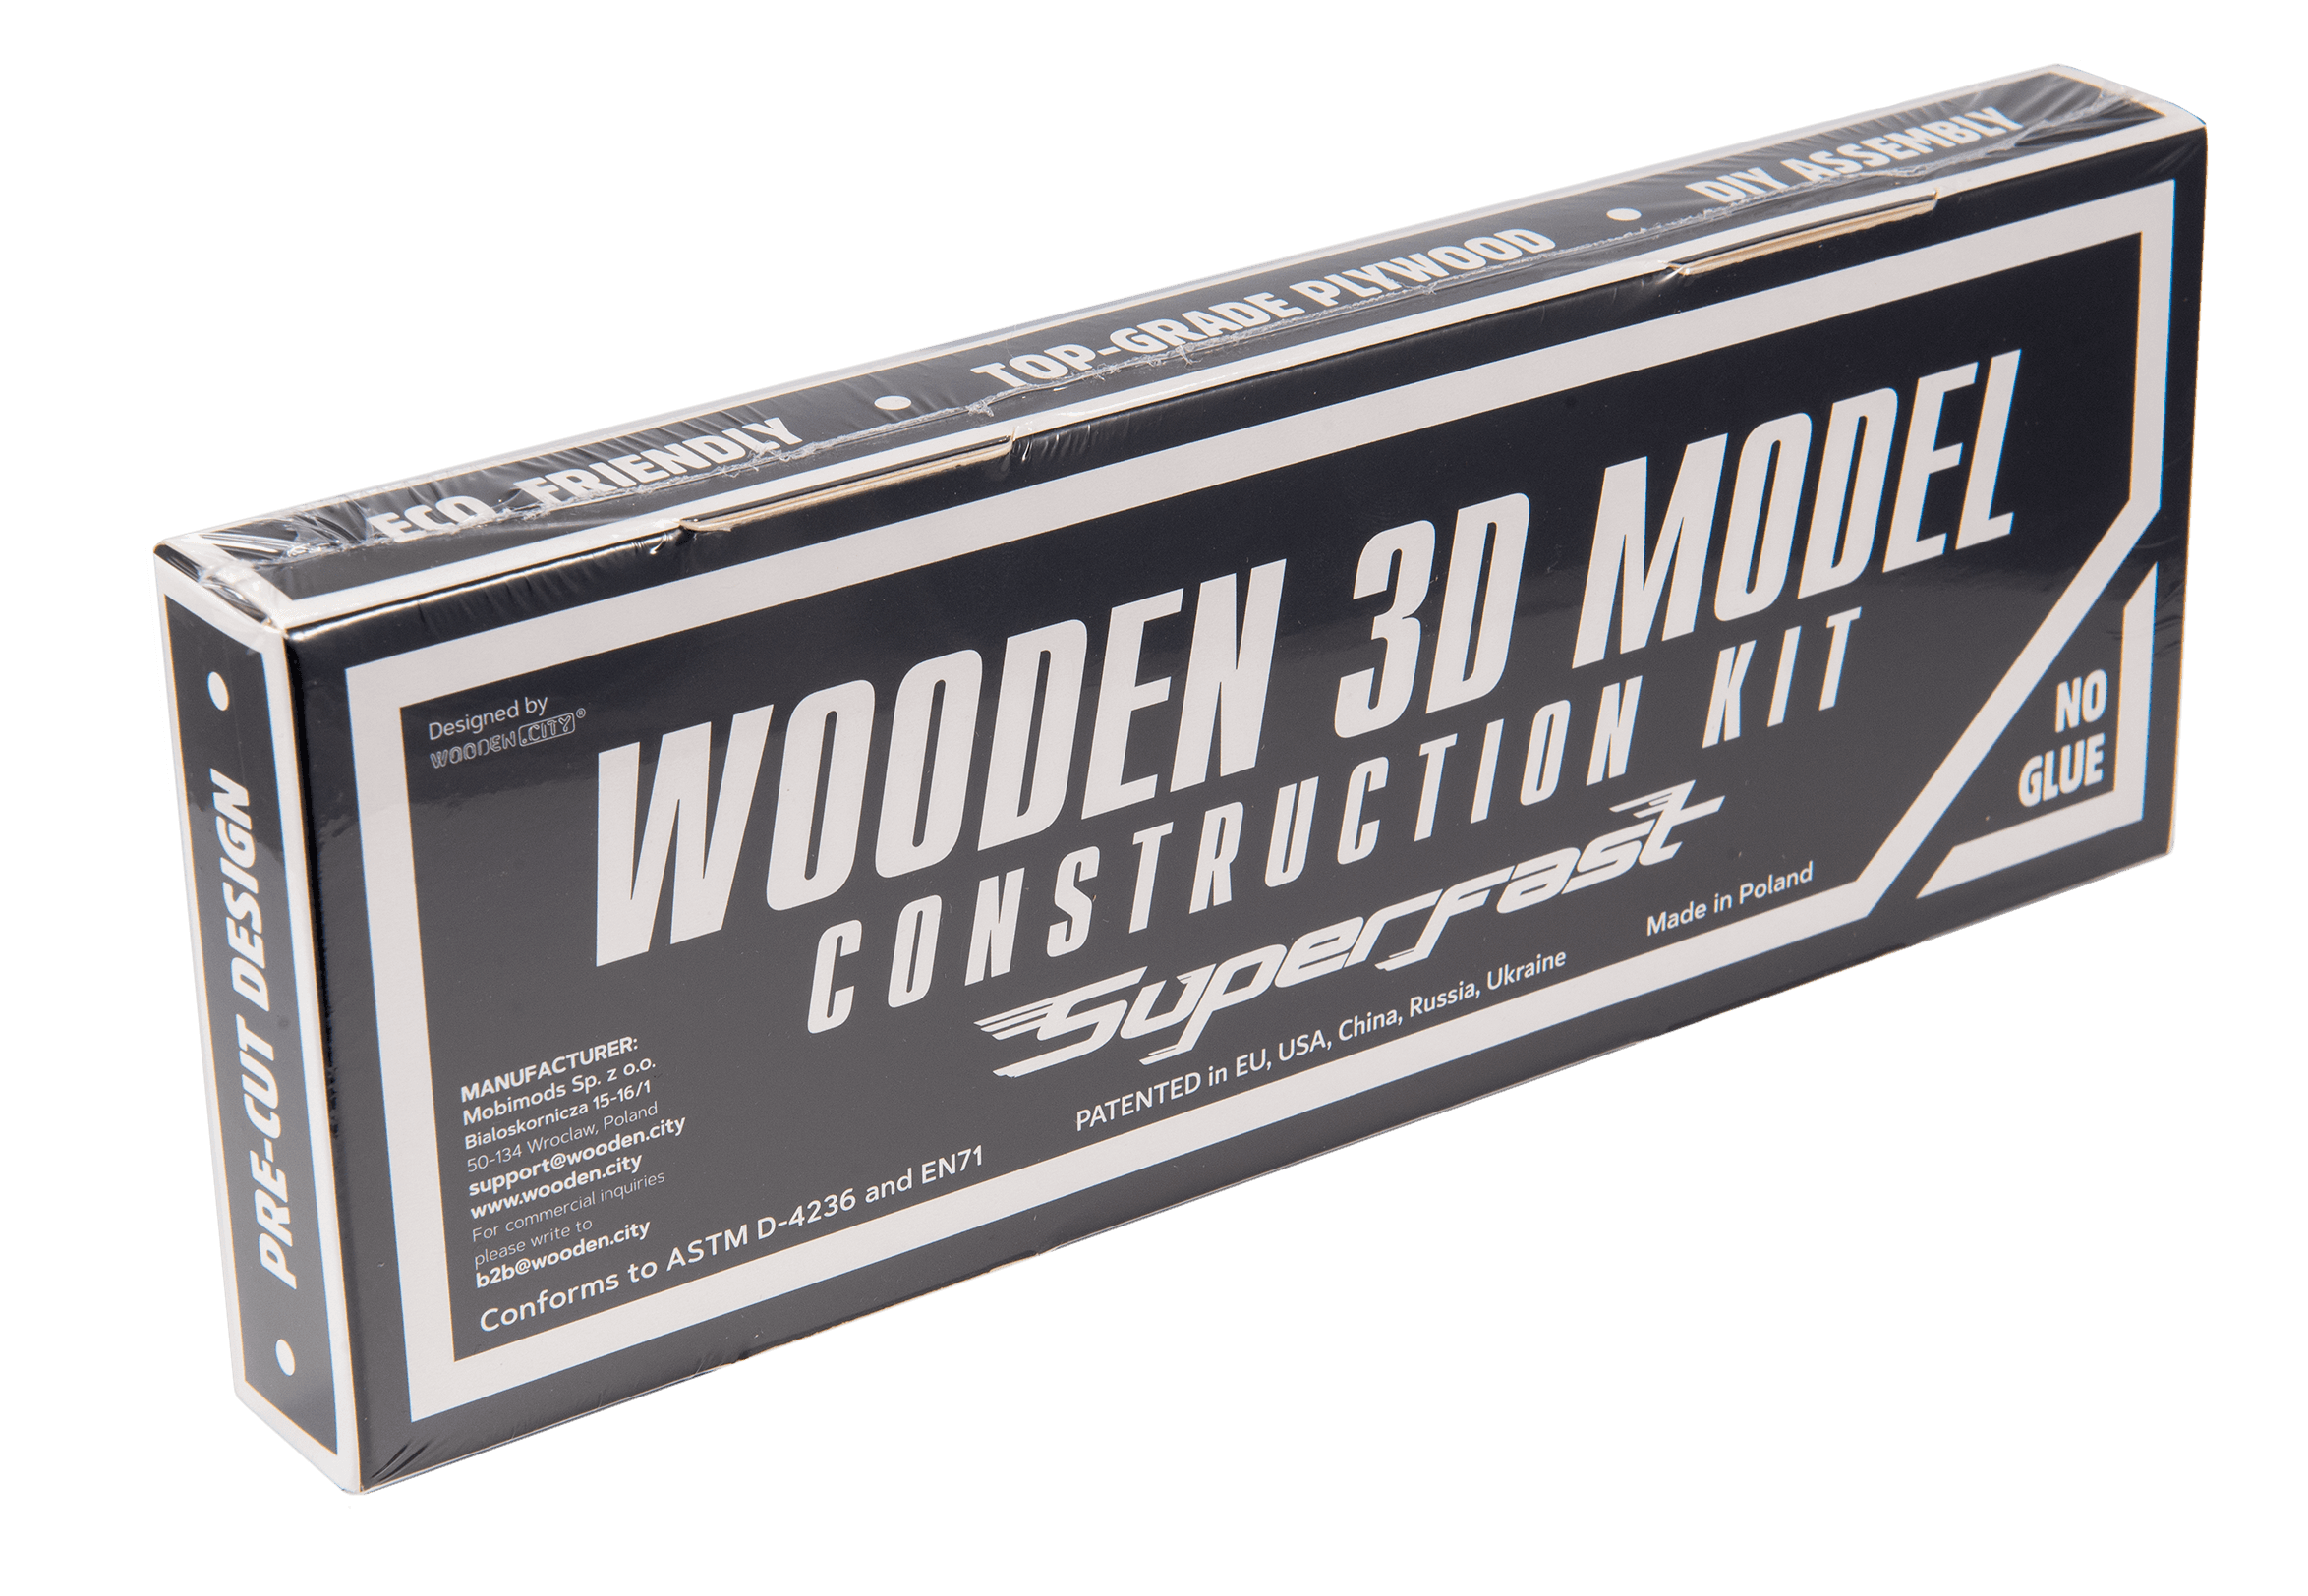 Wooden 3D Puzzle - Retro Ride 2 Model (Ford Model T)